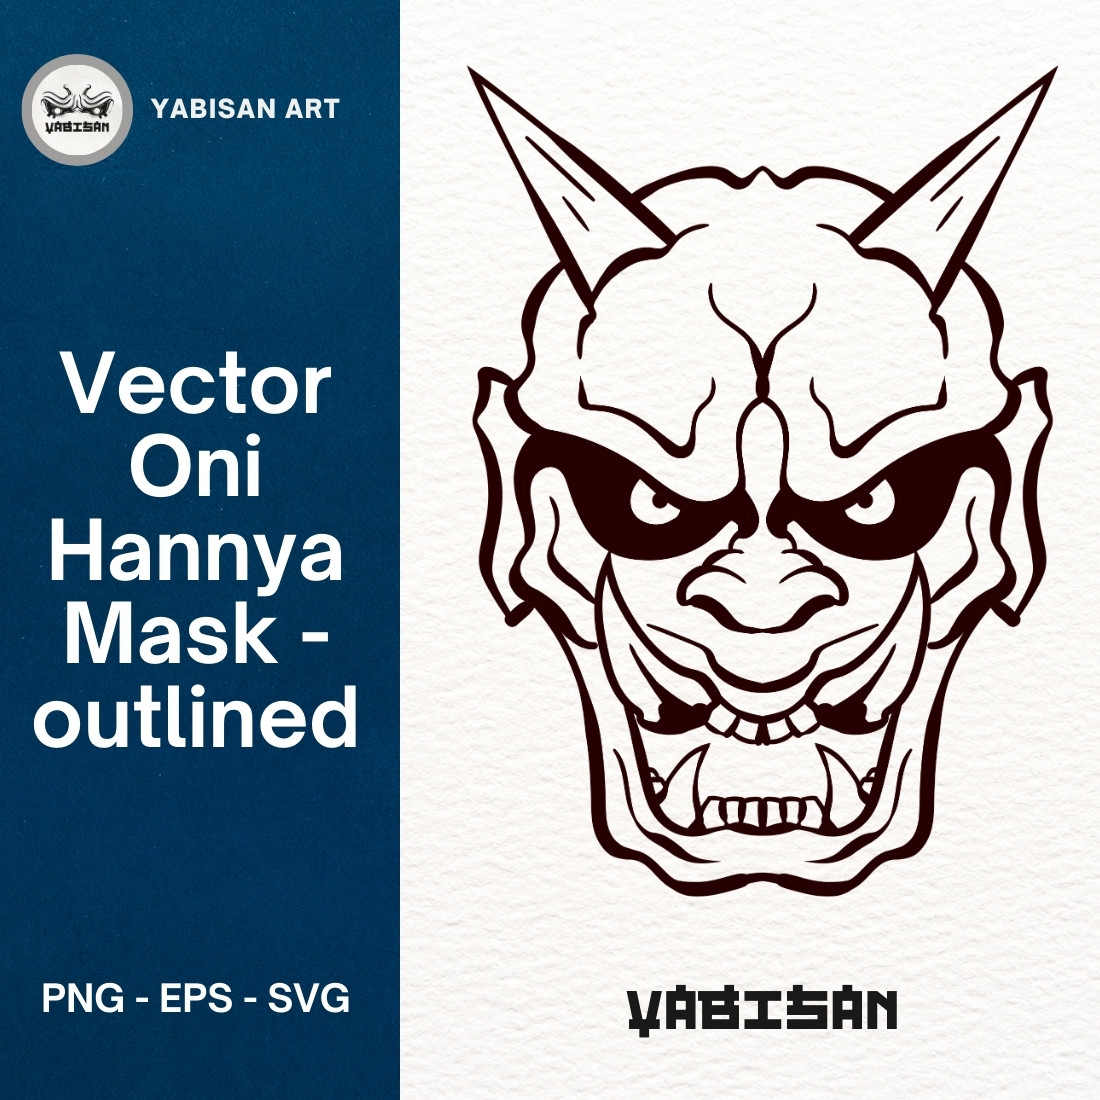 Oni Hannya Mask art 1 - outlined cover image.